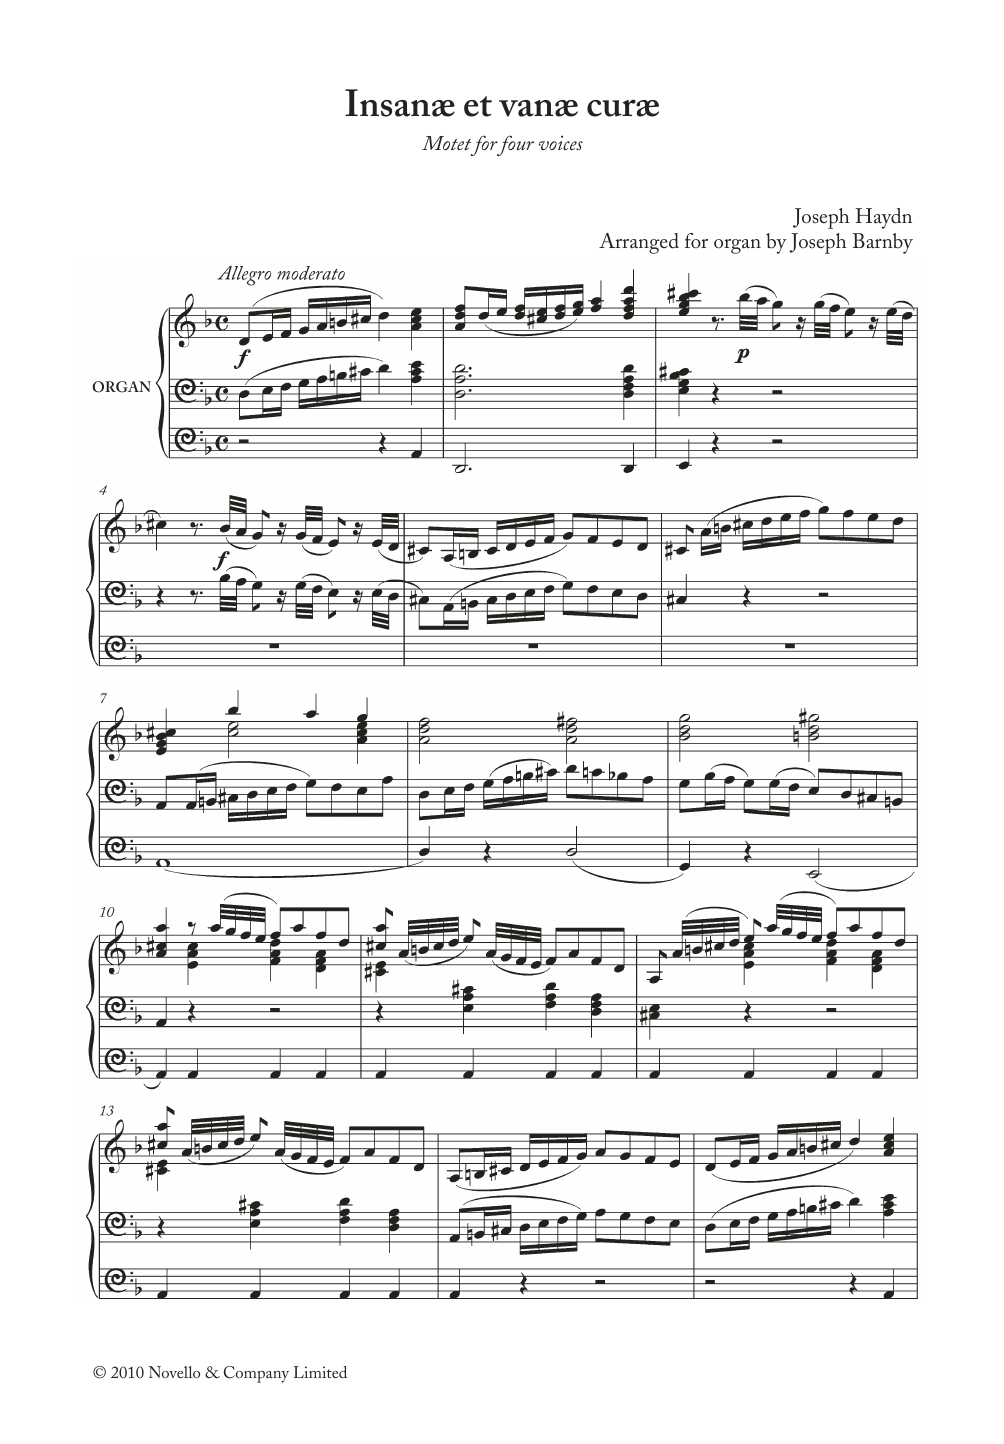 Franz Joseph Haydn Insanae Et Vanae Curae Sheet Music Notes & Chords for Choral - Download or Print PDF